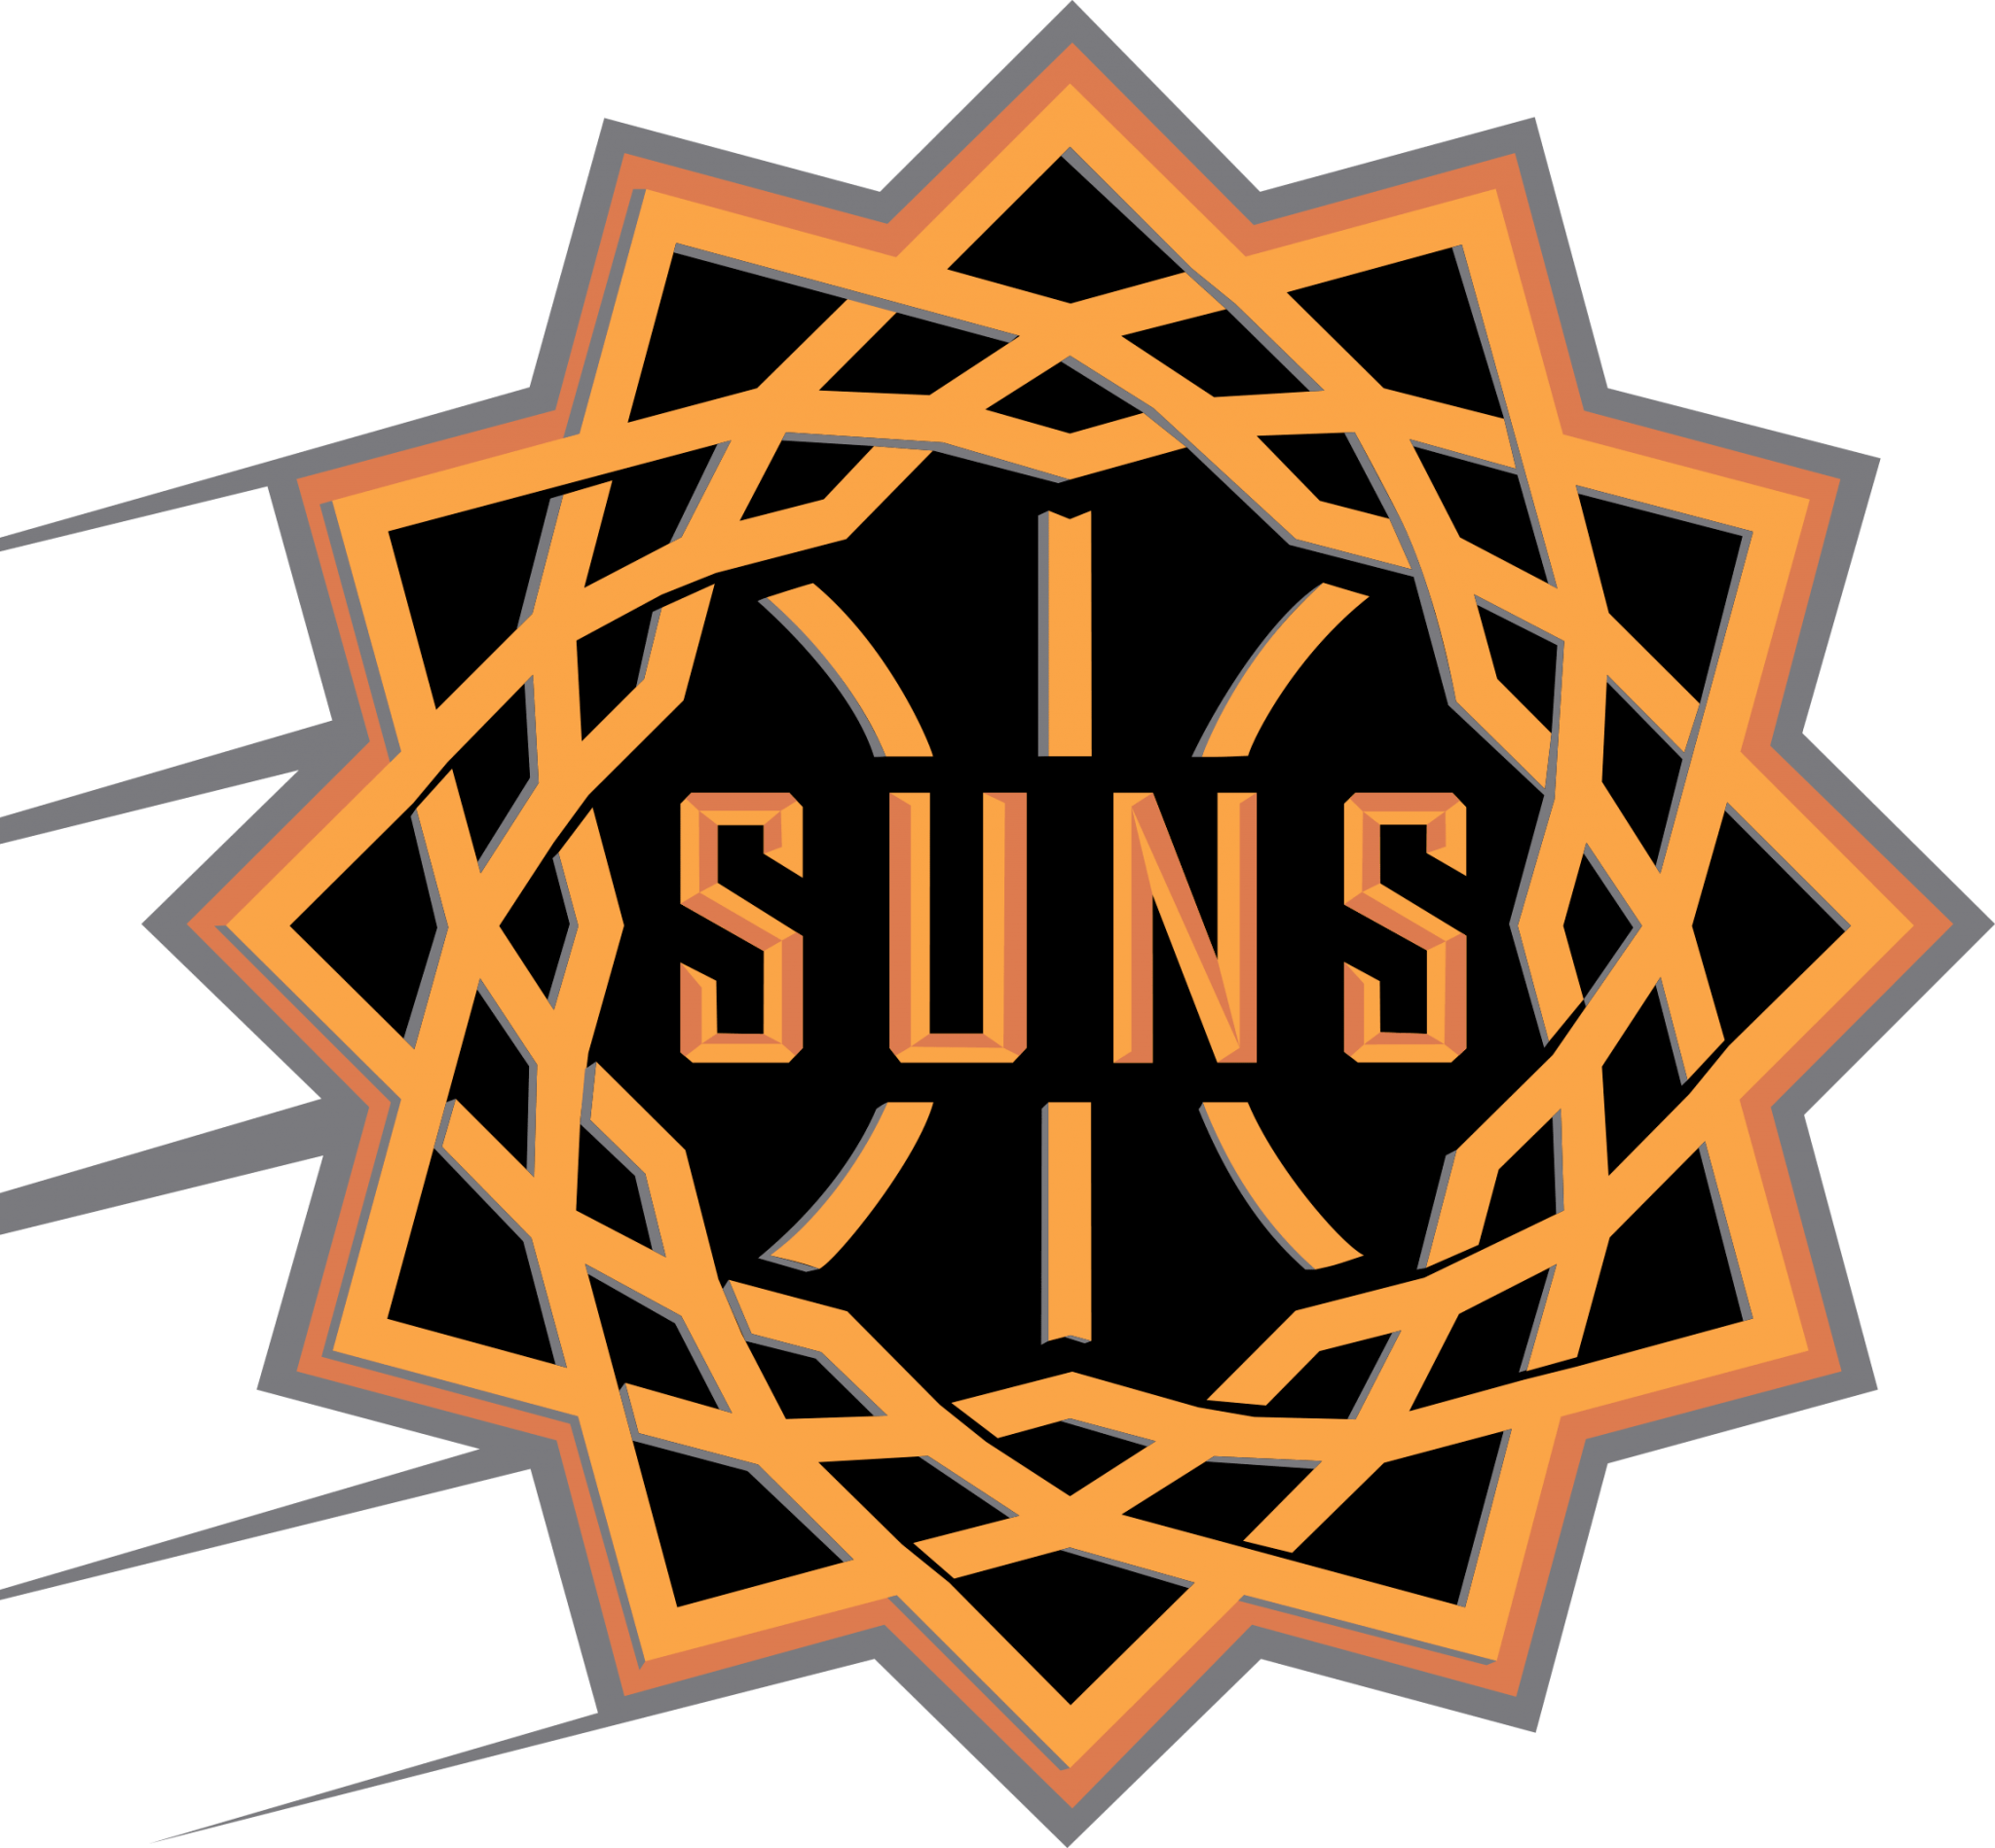 Phoenix Suns SVG